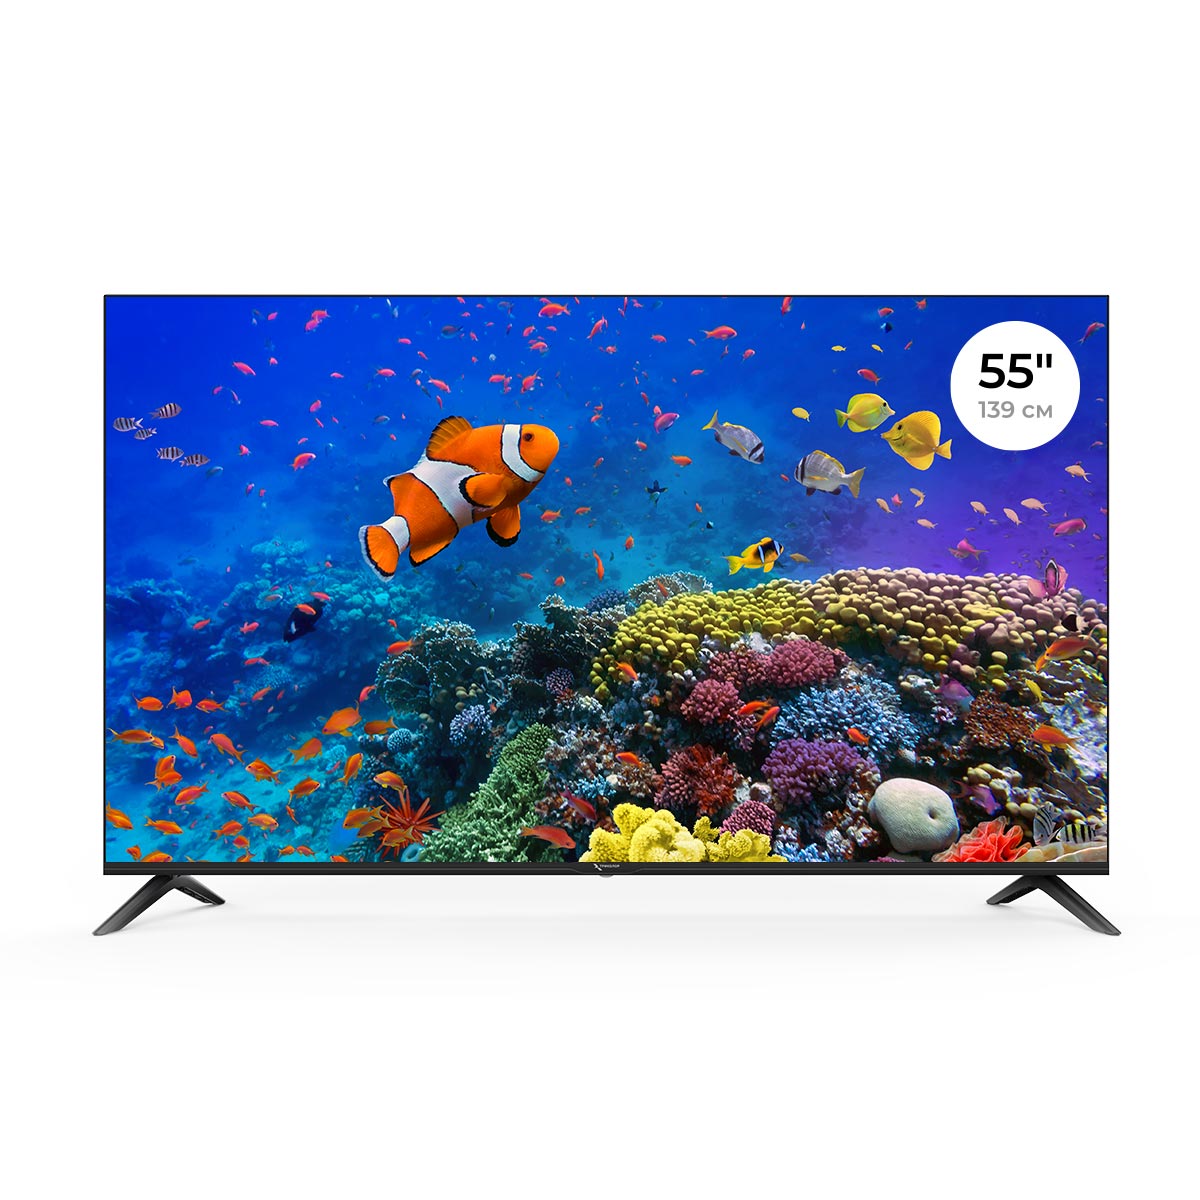 Телевизор Триколор H55U5500SA, 55"(140 см), UHD 4K - купить в HOLODILNIK.RU (Север), цена на Мегамаркет